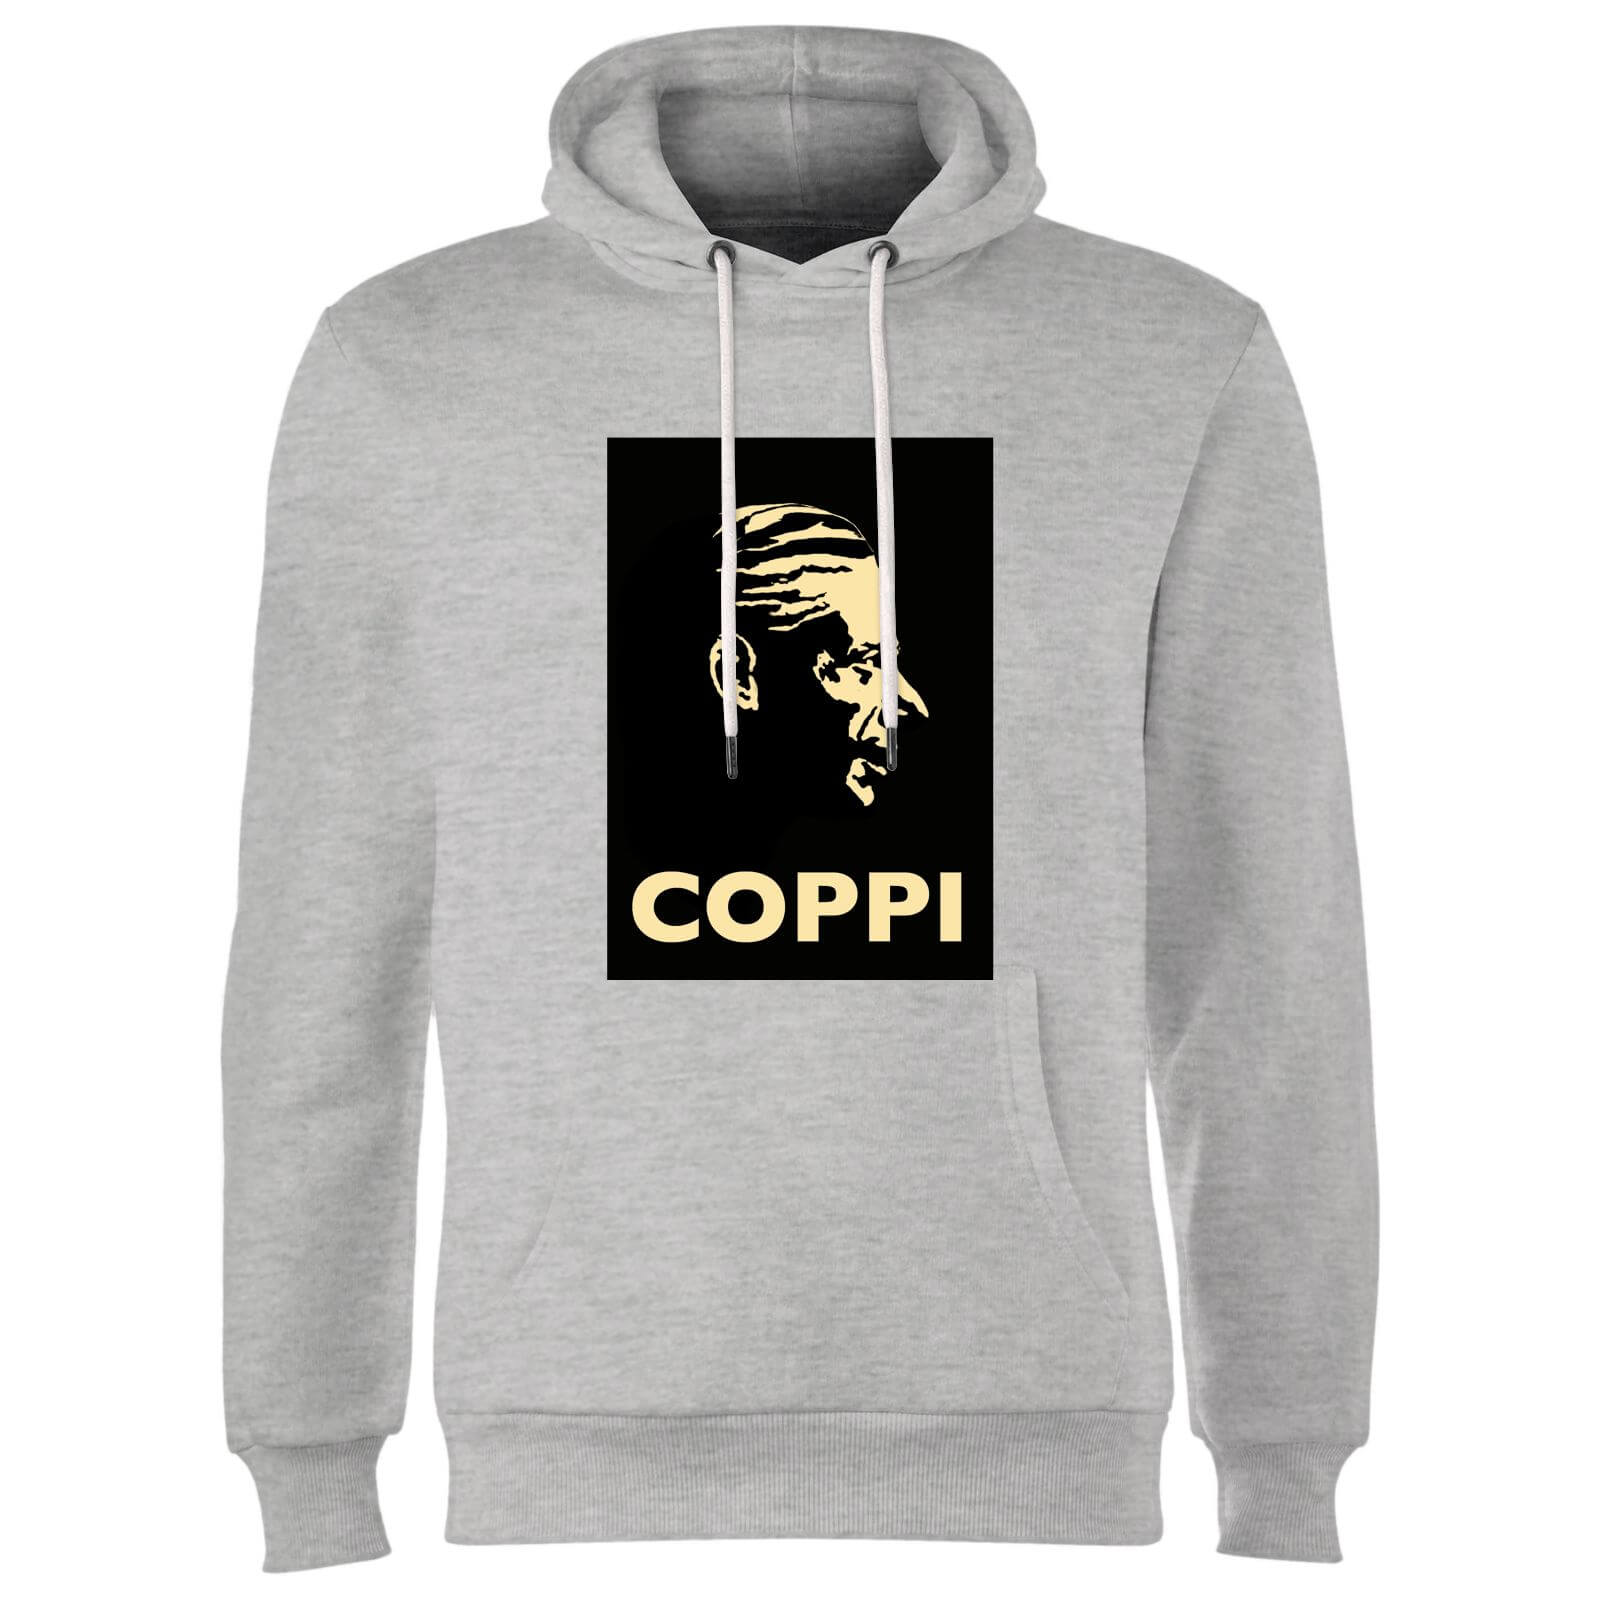 Coppi Hoodie - Grey - M - Grey